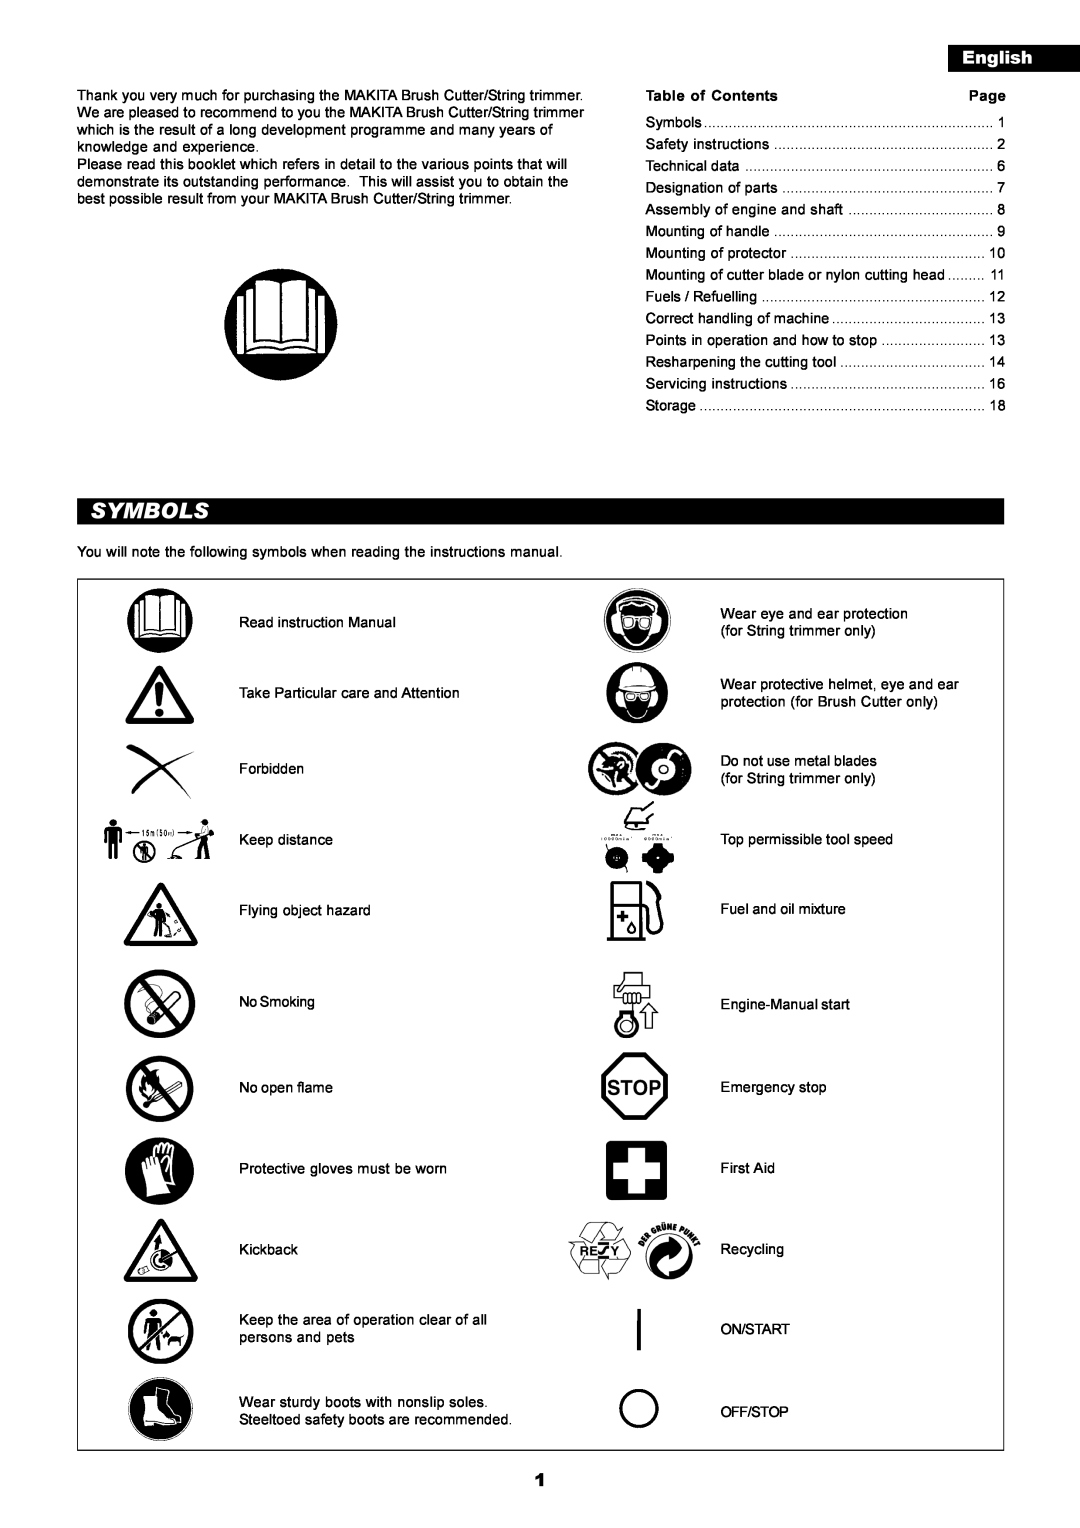 Makita RBC2510, RBC2500 instruction manual Symbols, English 